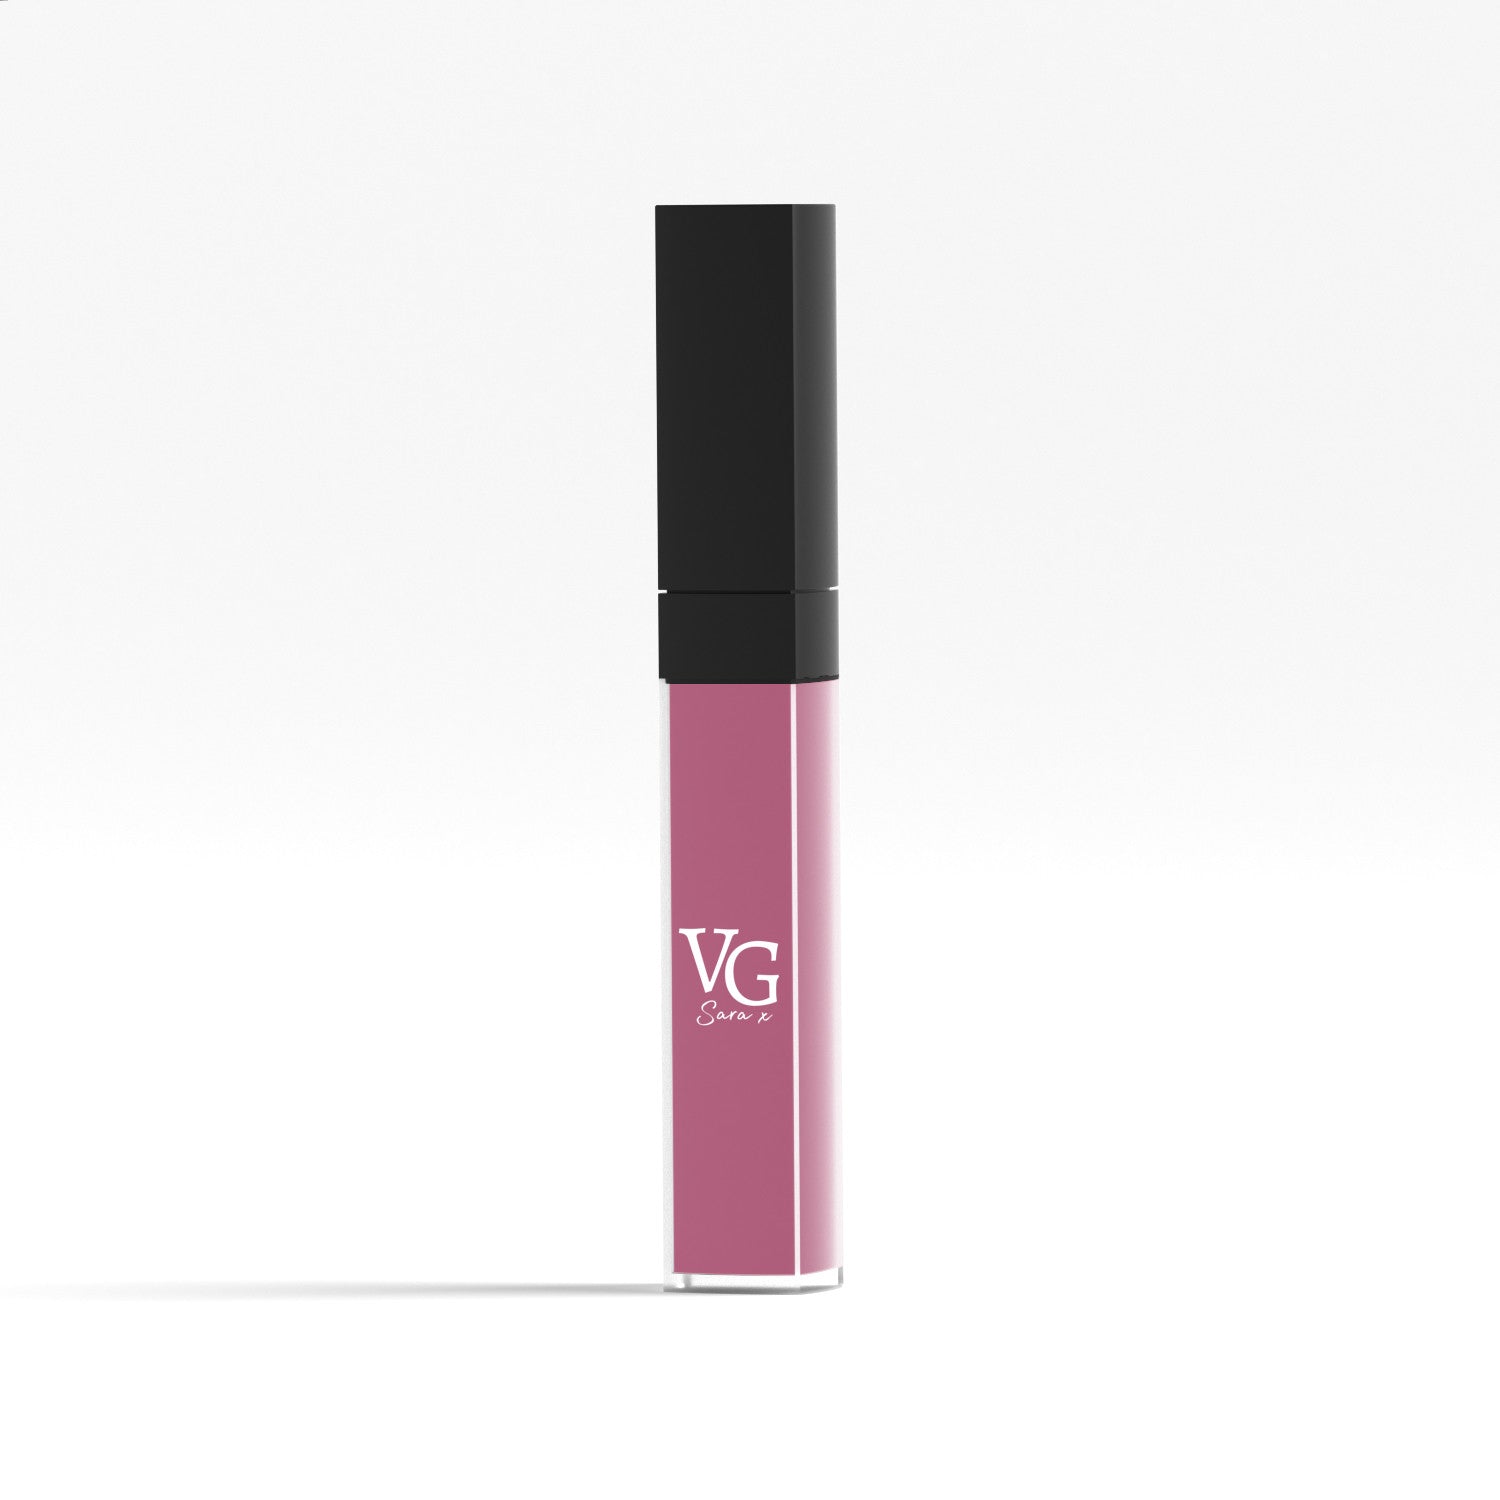 Pink vegan liquid lipstick with VG branding